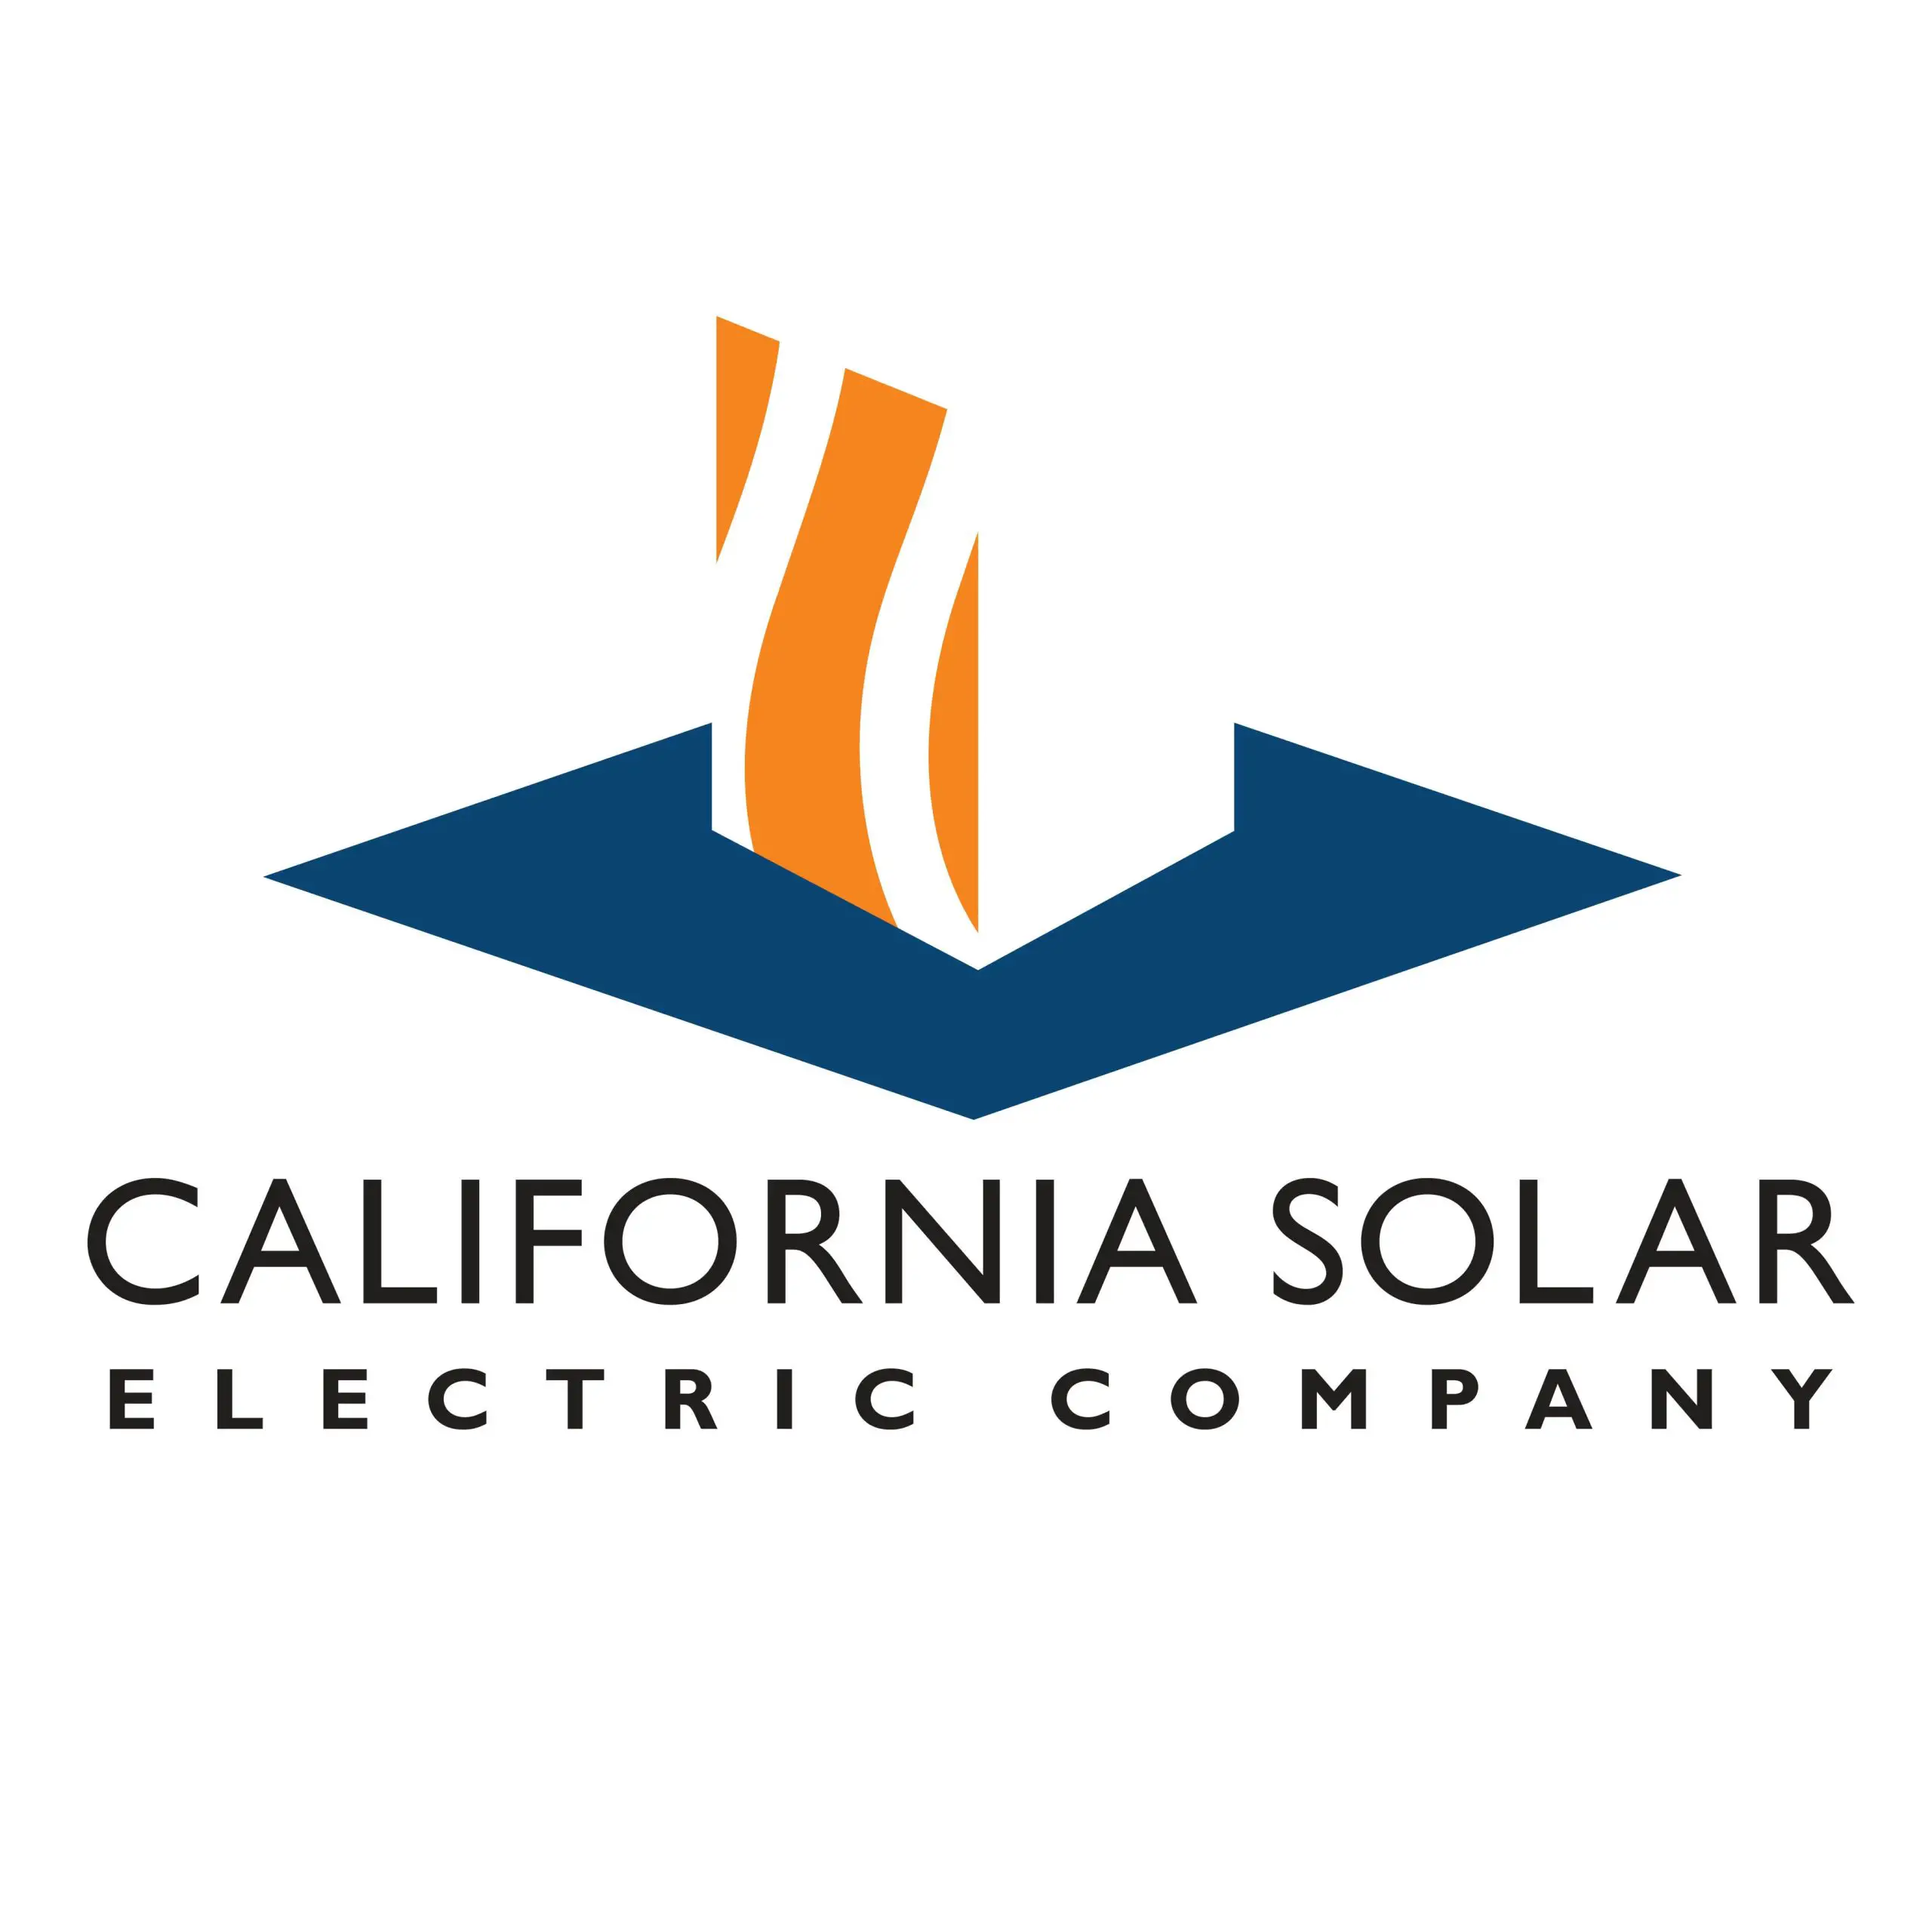 California Solar Electric Company solar reviews, complaints, address ...